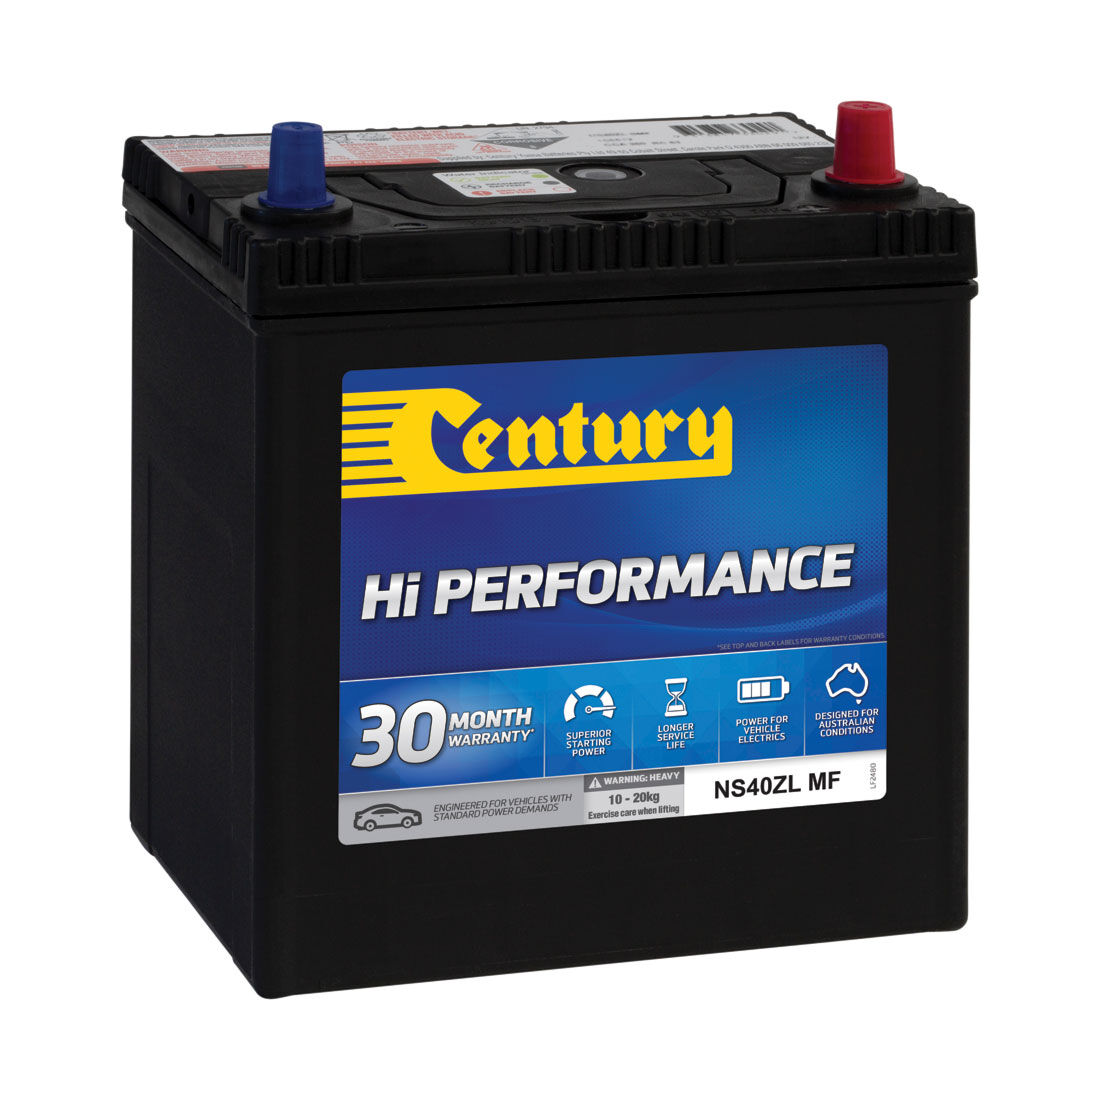 Century Hi Performance Car Battery NS40ZL MF, , scaau_hi-res